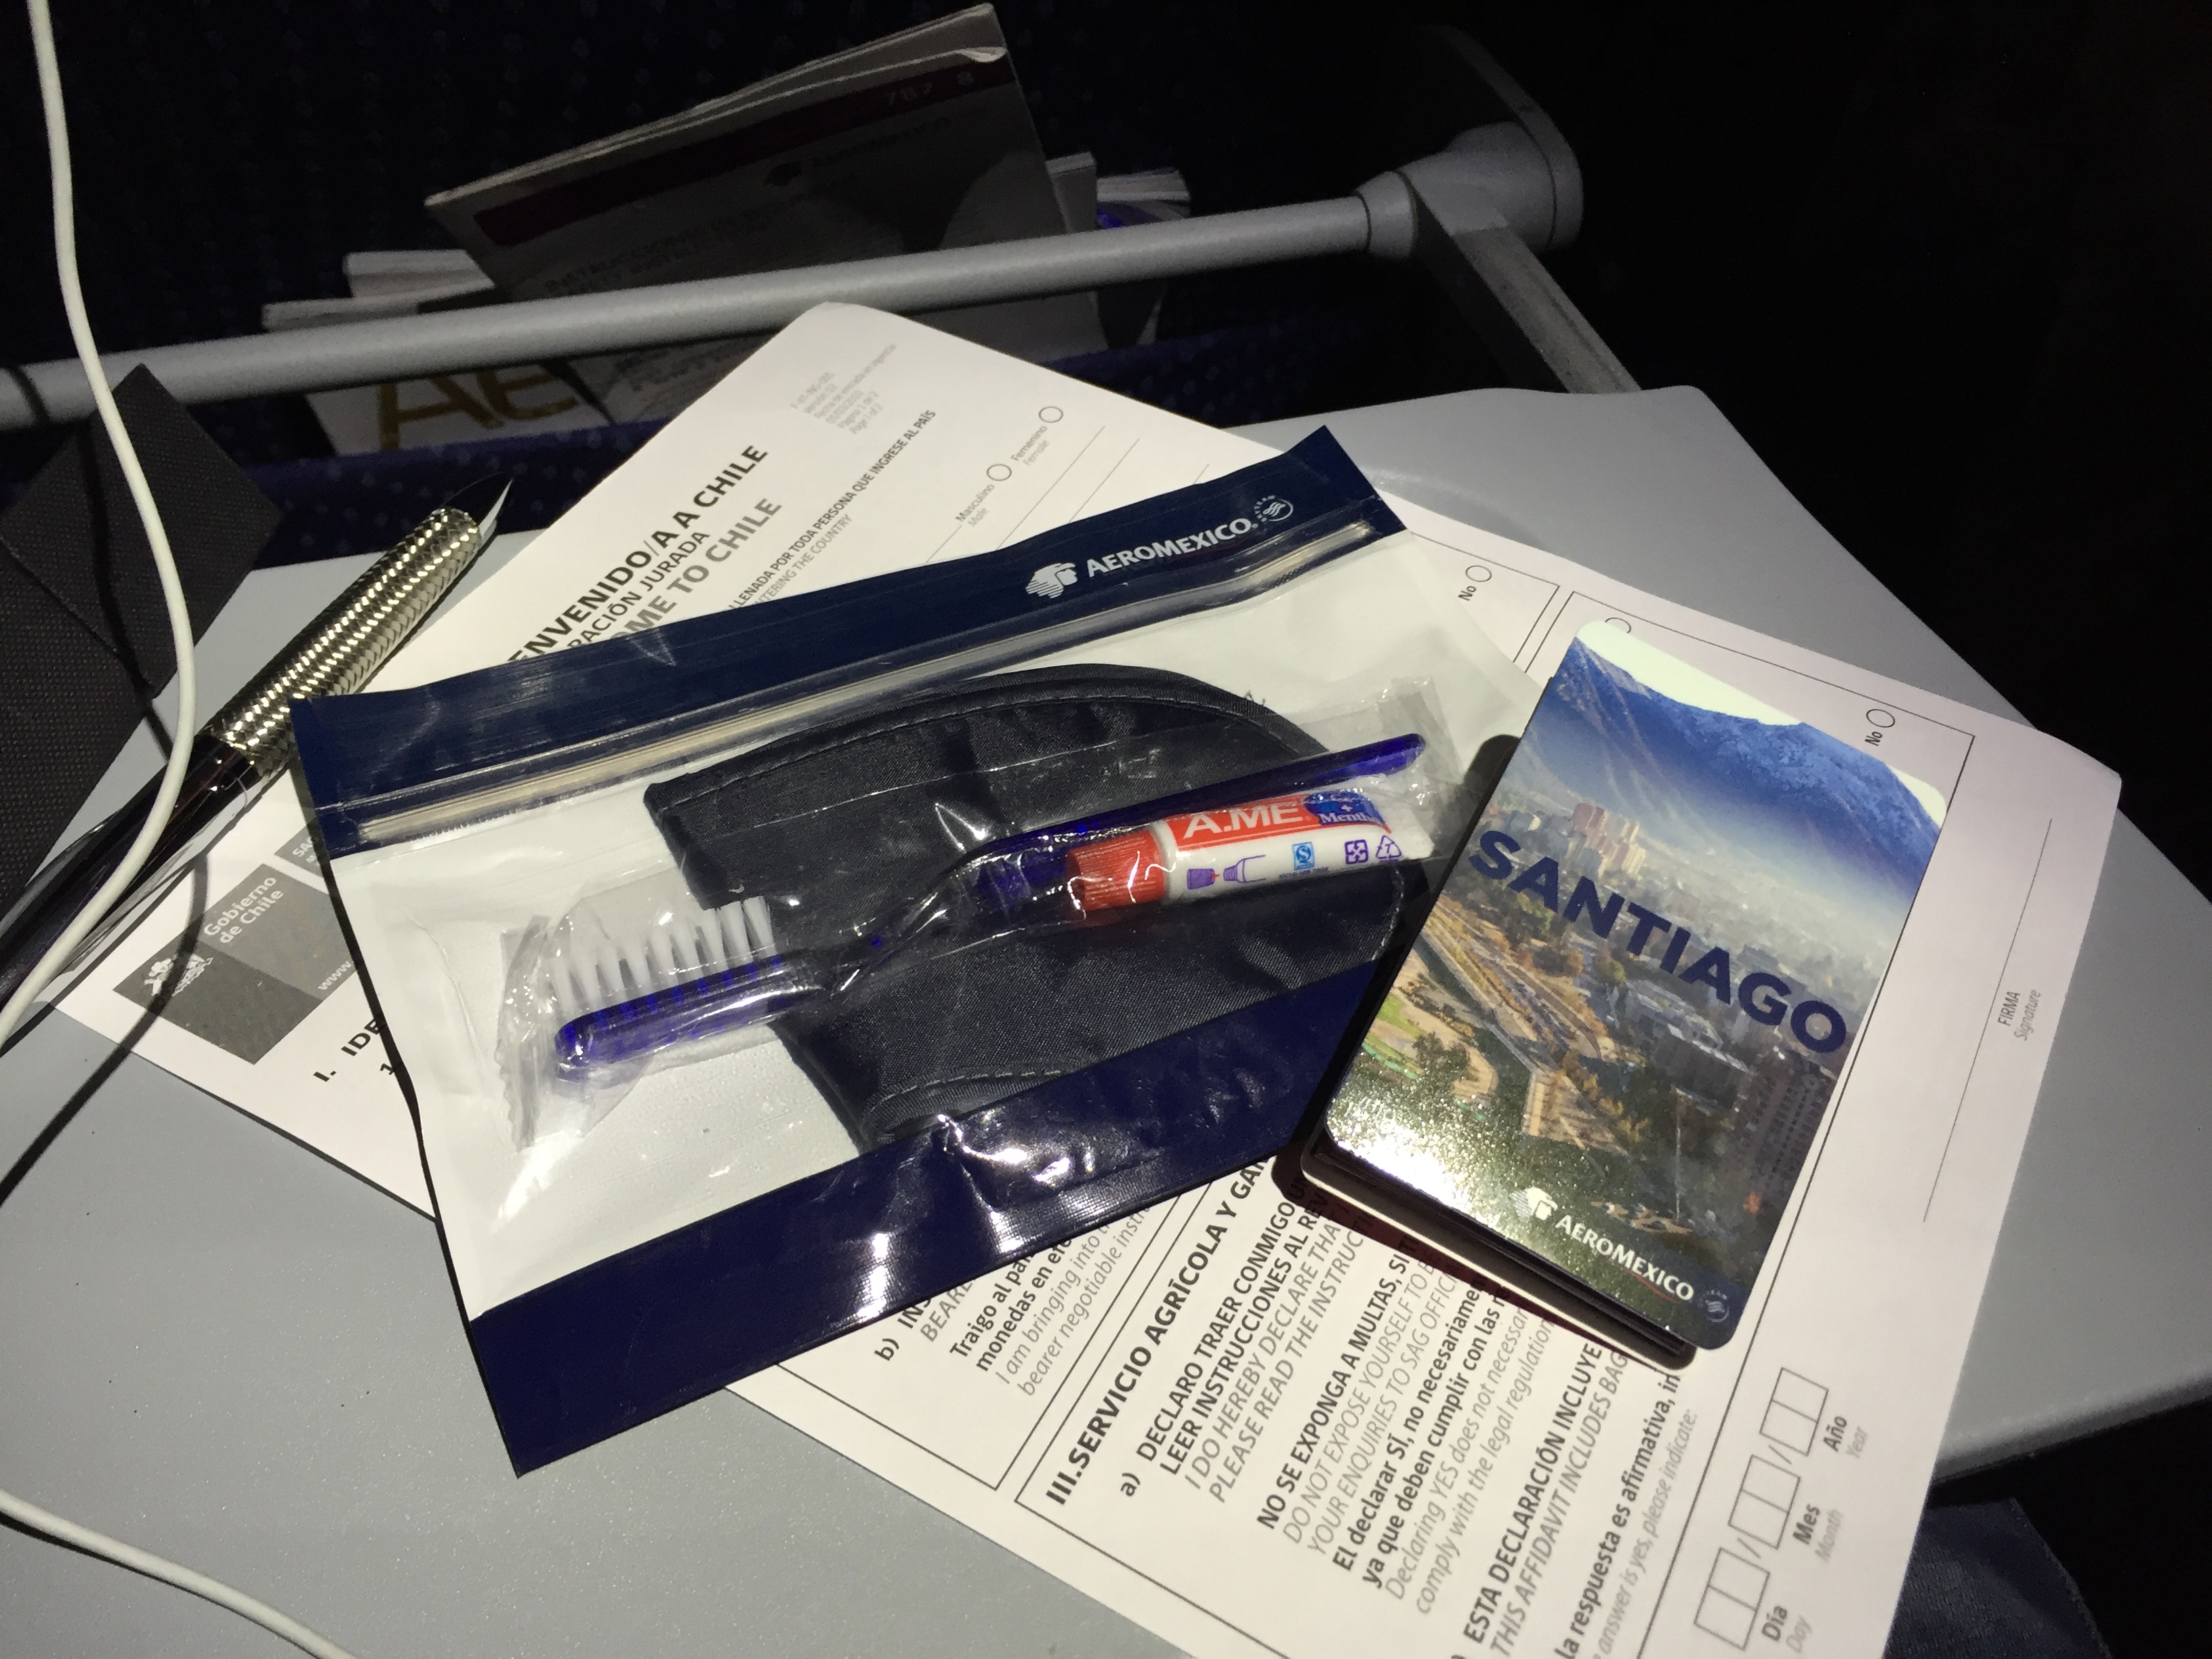 Amenity Kit de clase turista: Antifaz, Cepillo y pasta dental.